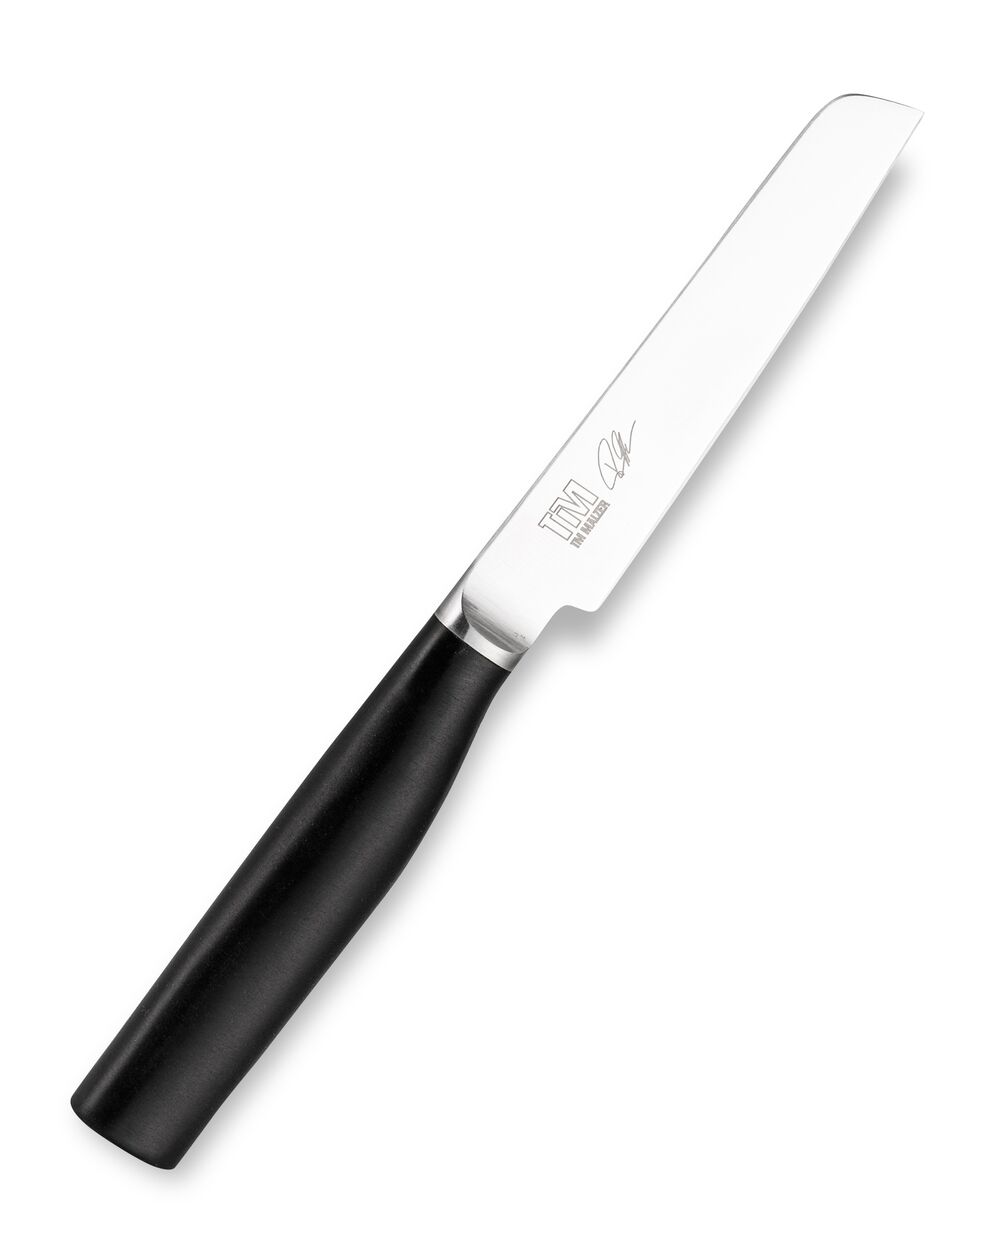 Нож овощной KAI Камагата 9 см, кованая сталь, ручка пластик - фото 9